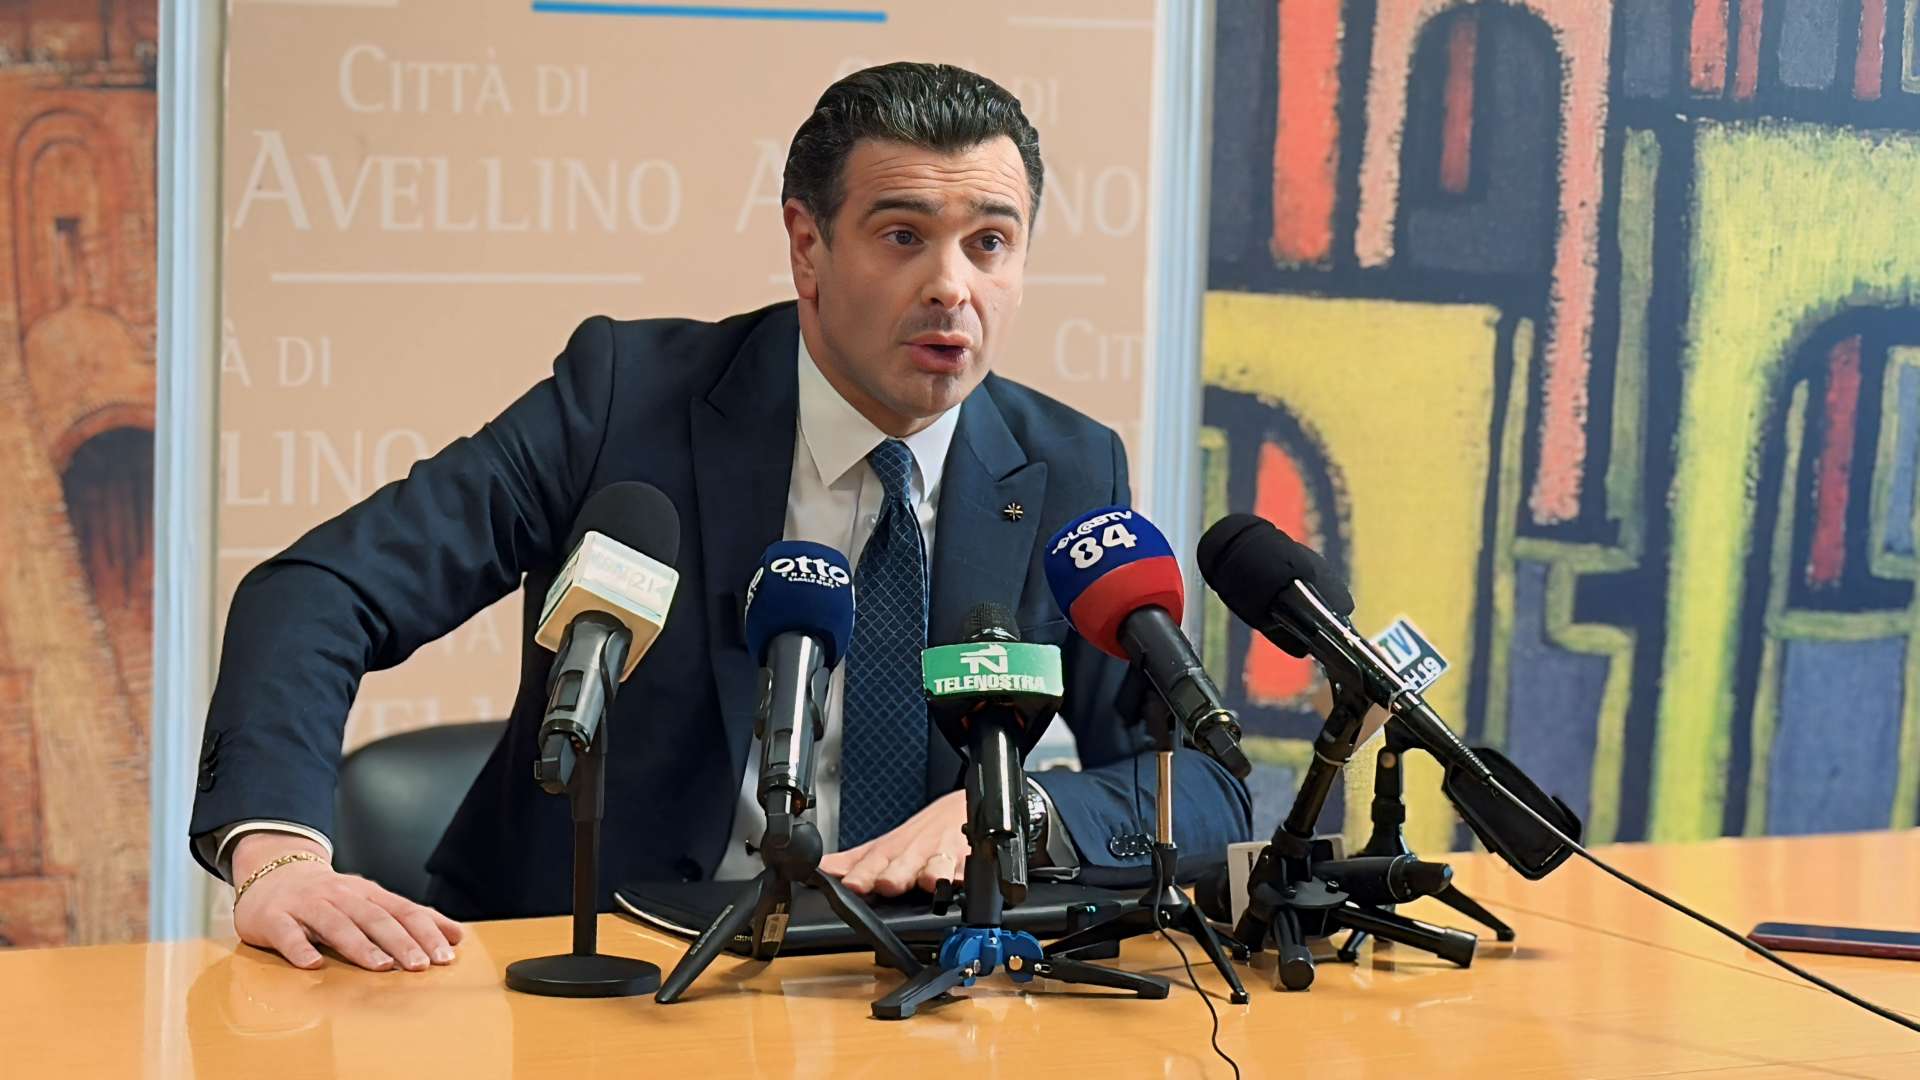 Avellino, arresti domiciliari per l’ex sindaco Gianluca Festa: le reazioni